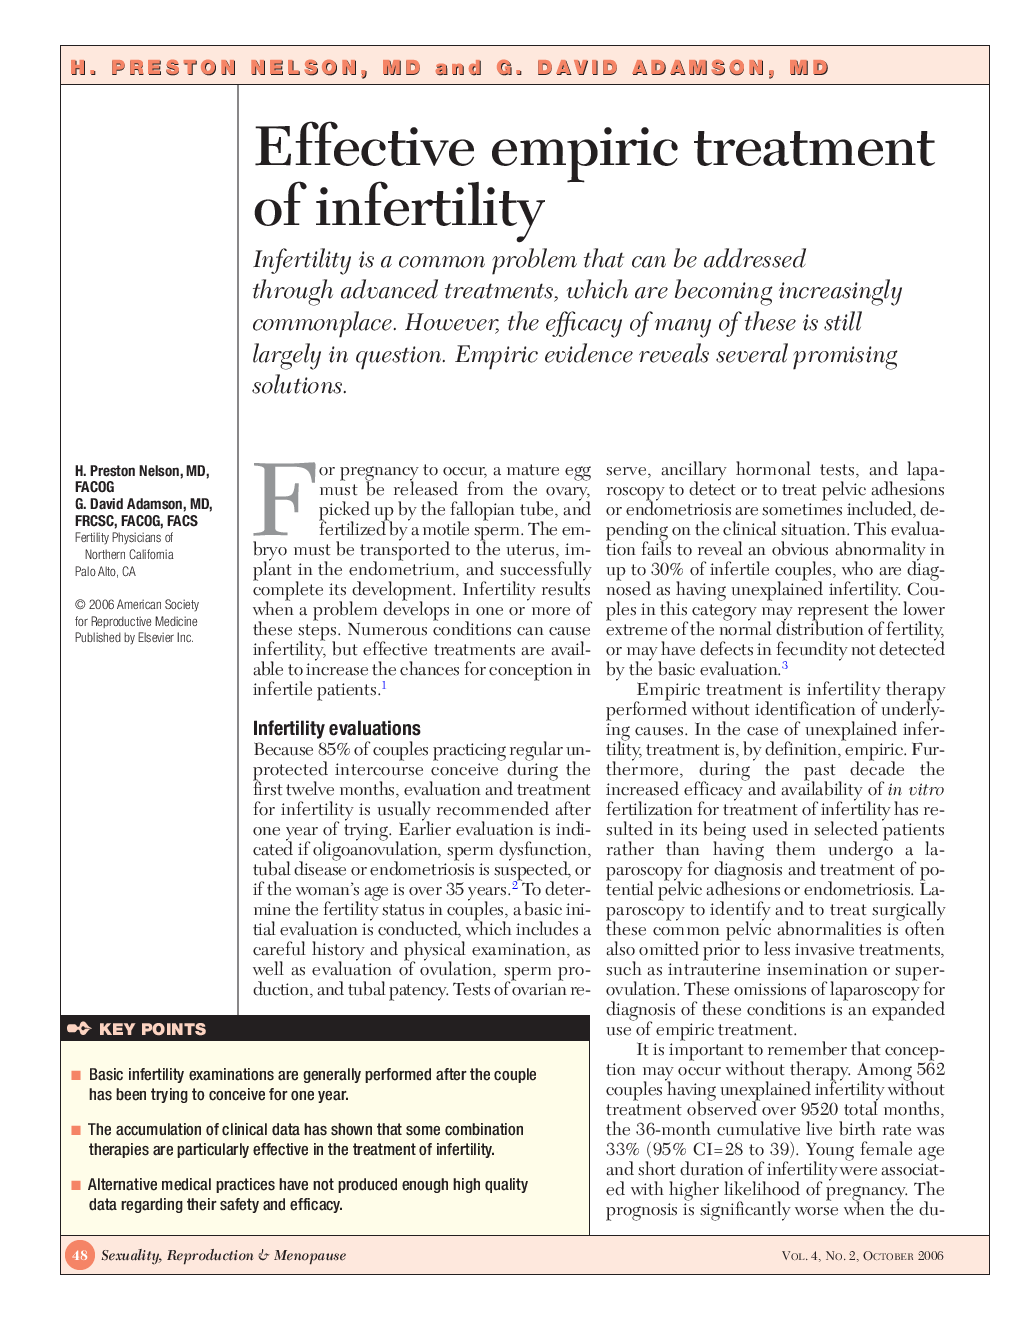 Effective empiric treatment of infertility